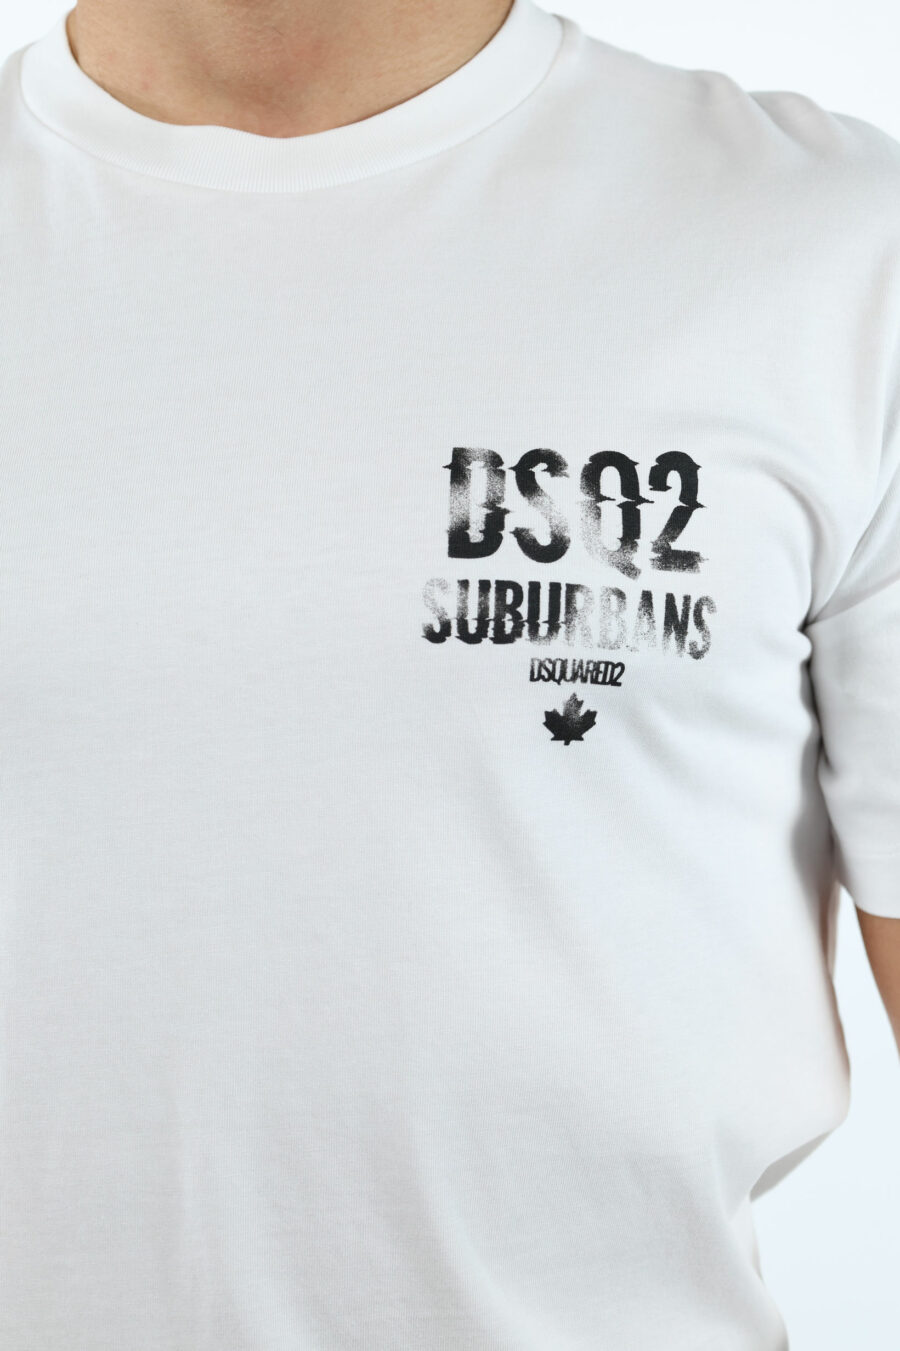 T-shirt white with minilogo "suburbans" black - 106624